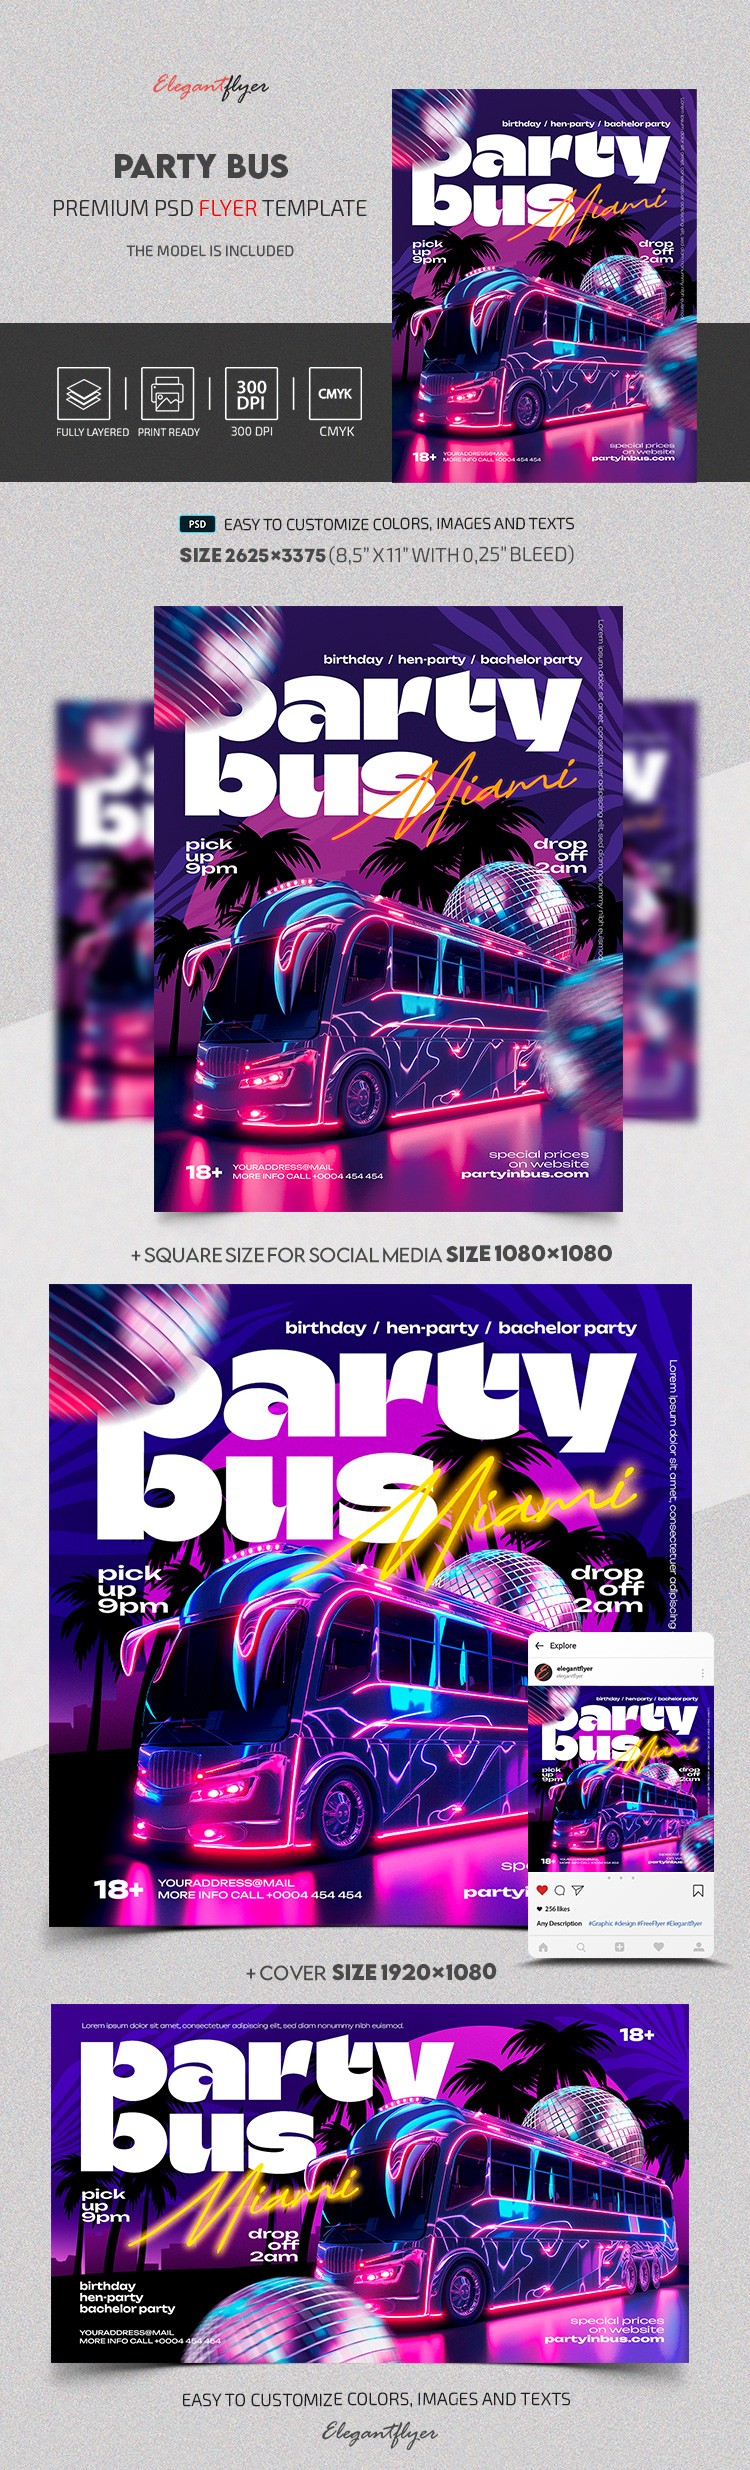 Partybus by ElegantFlyer